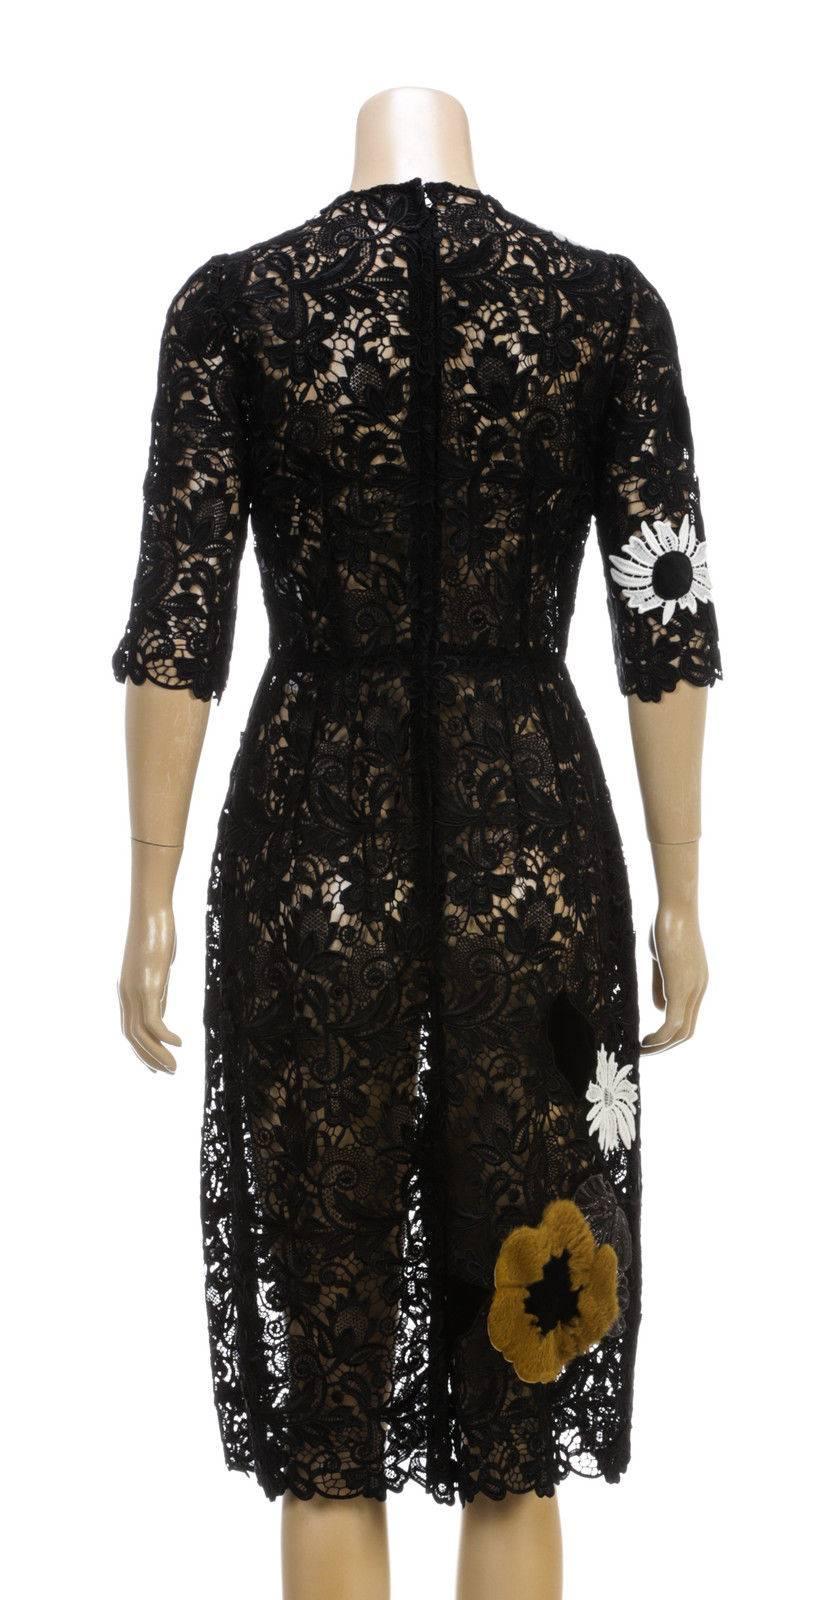 Dolce & Gabbana Black Half Sleeve Macrame Floral Applique Dress AW 14 (Size 40) For Sale 2